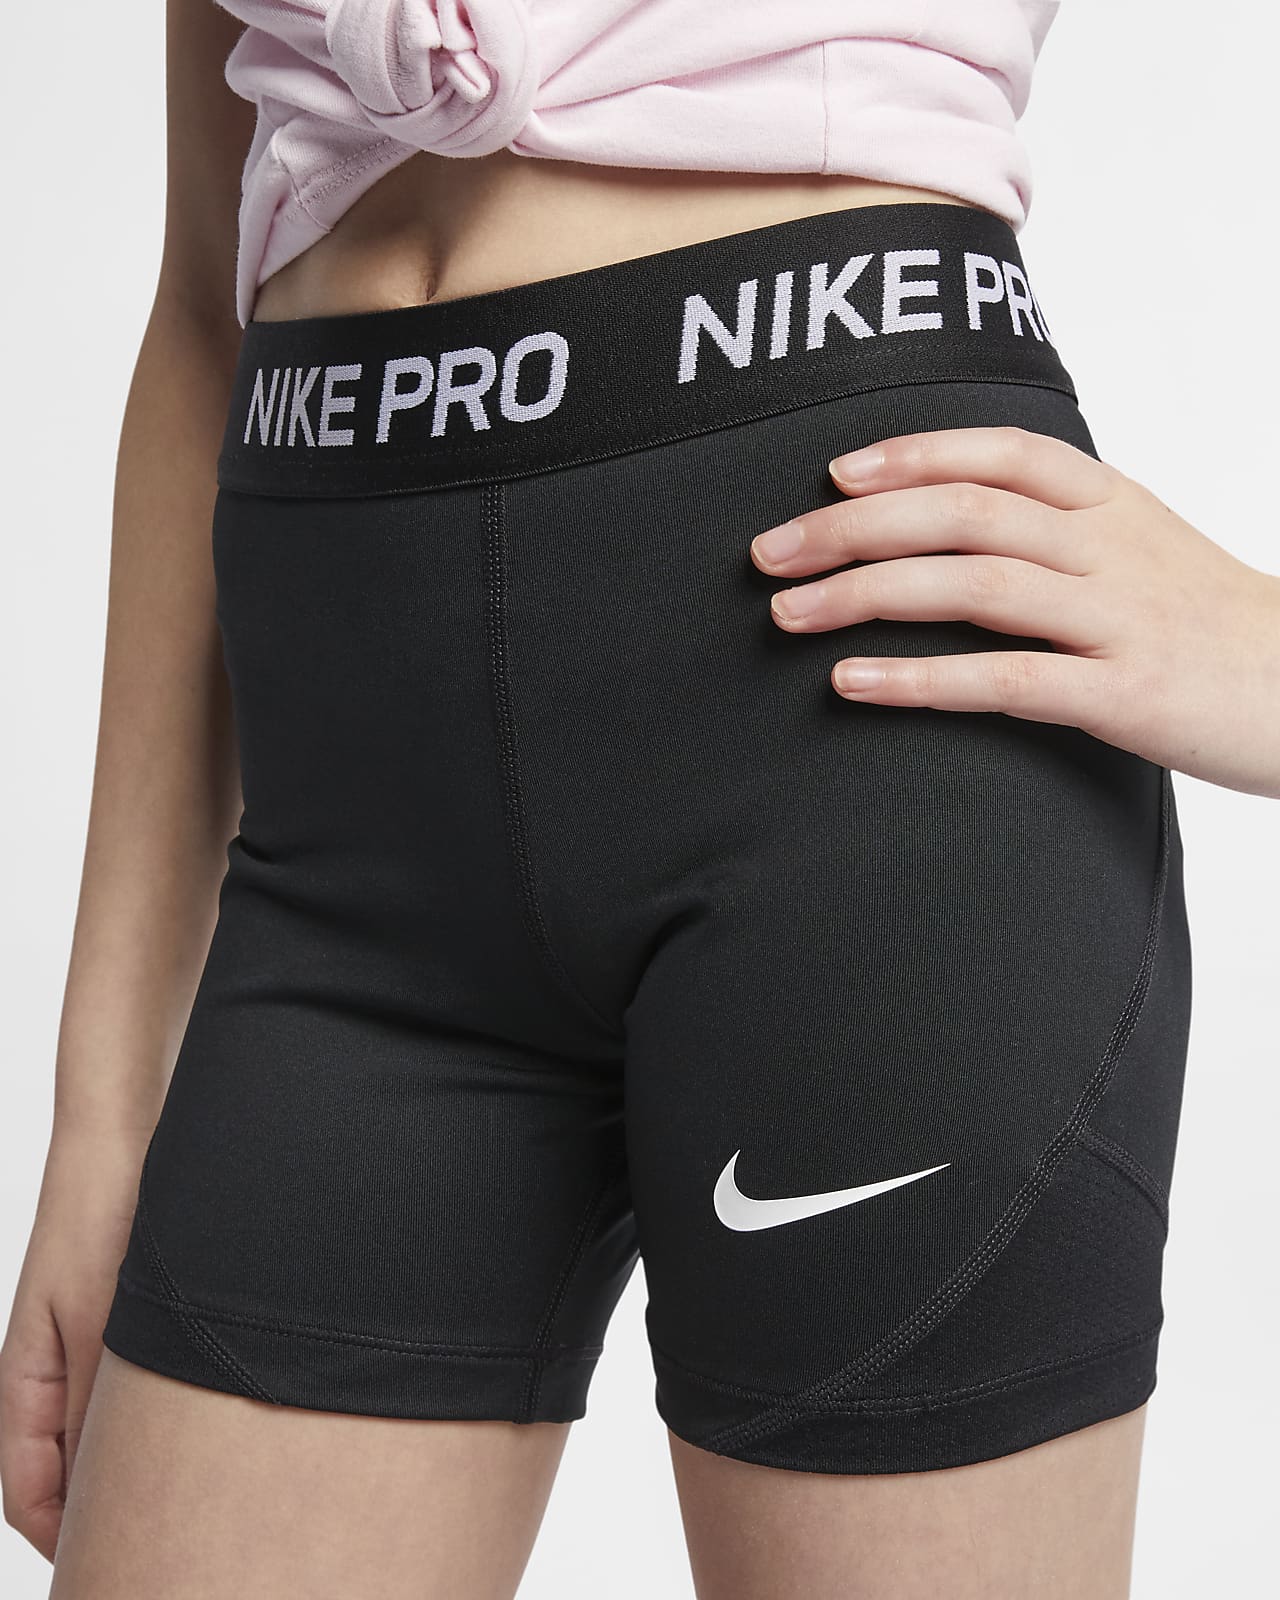 nike boy shorts for girls